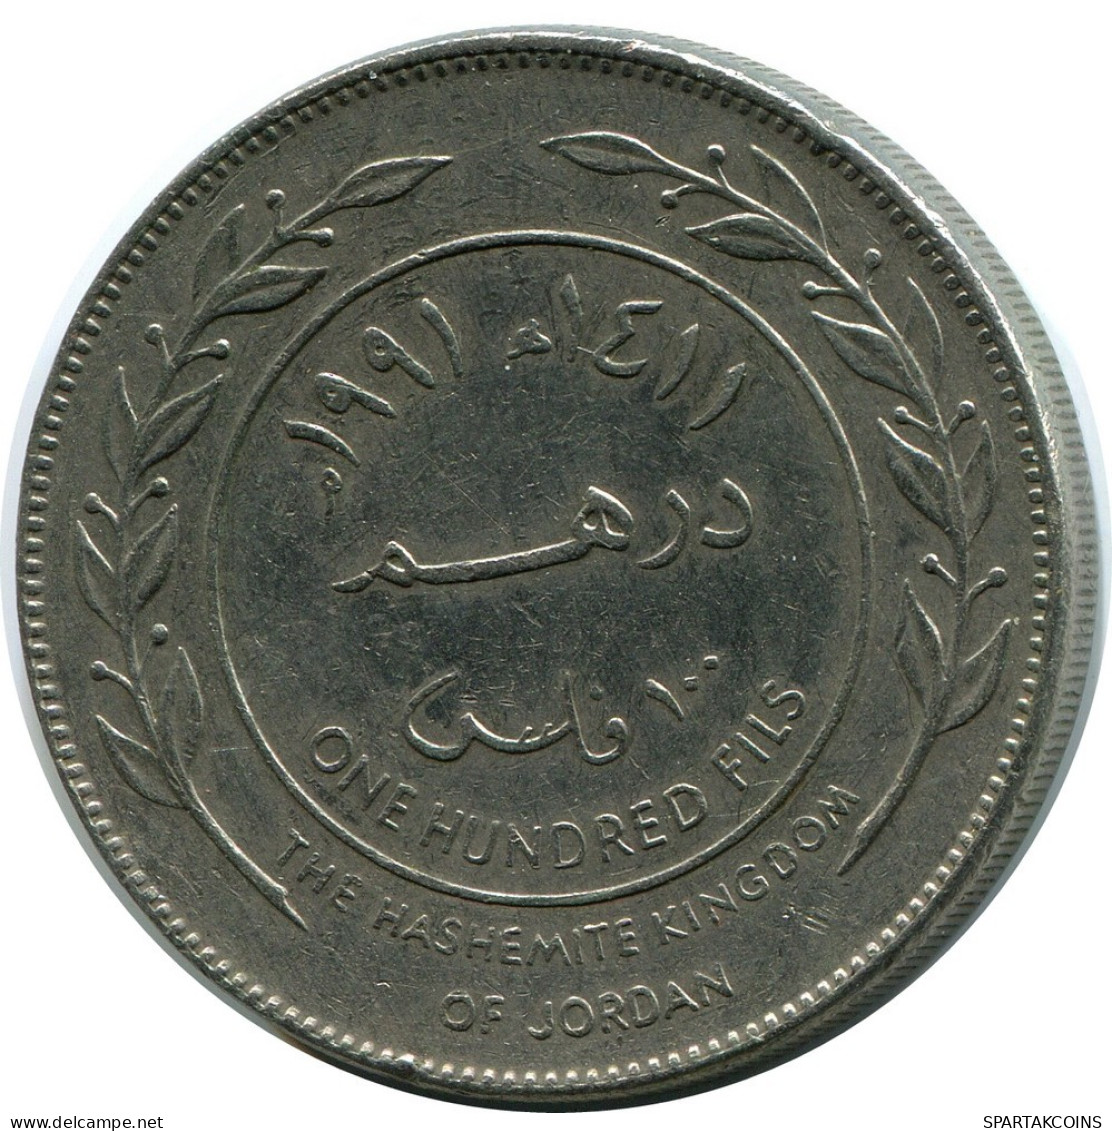 1 DIRHAM / 100 FILS 1991 JORDAN Coin #AP103.U.A - Jordanie